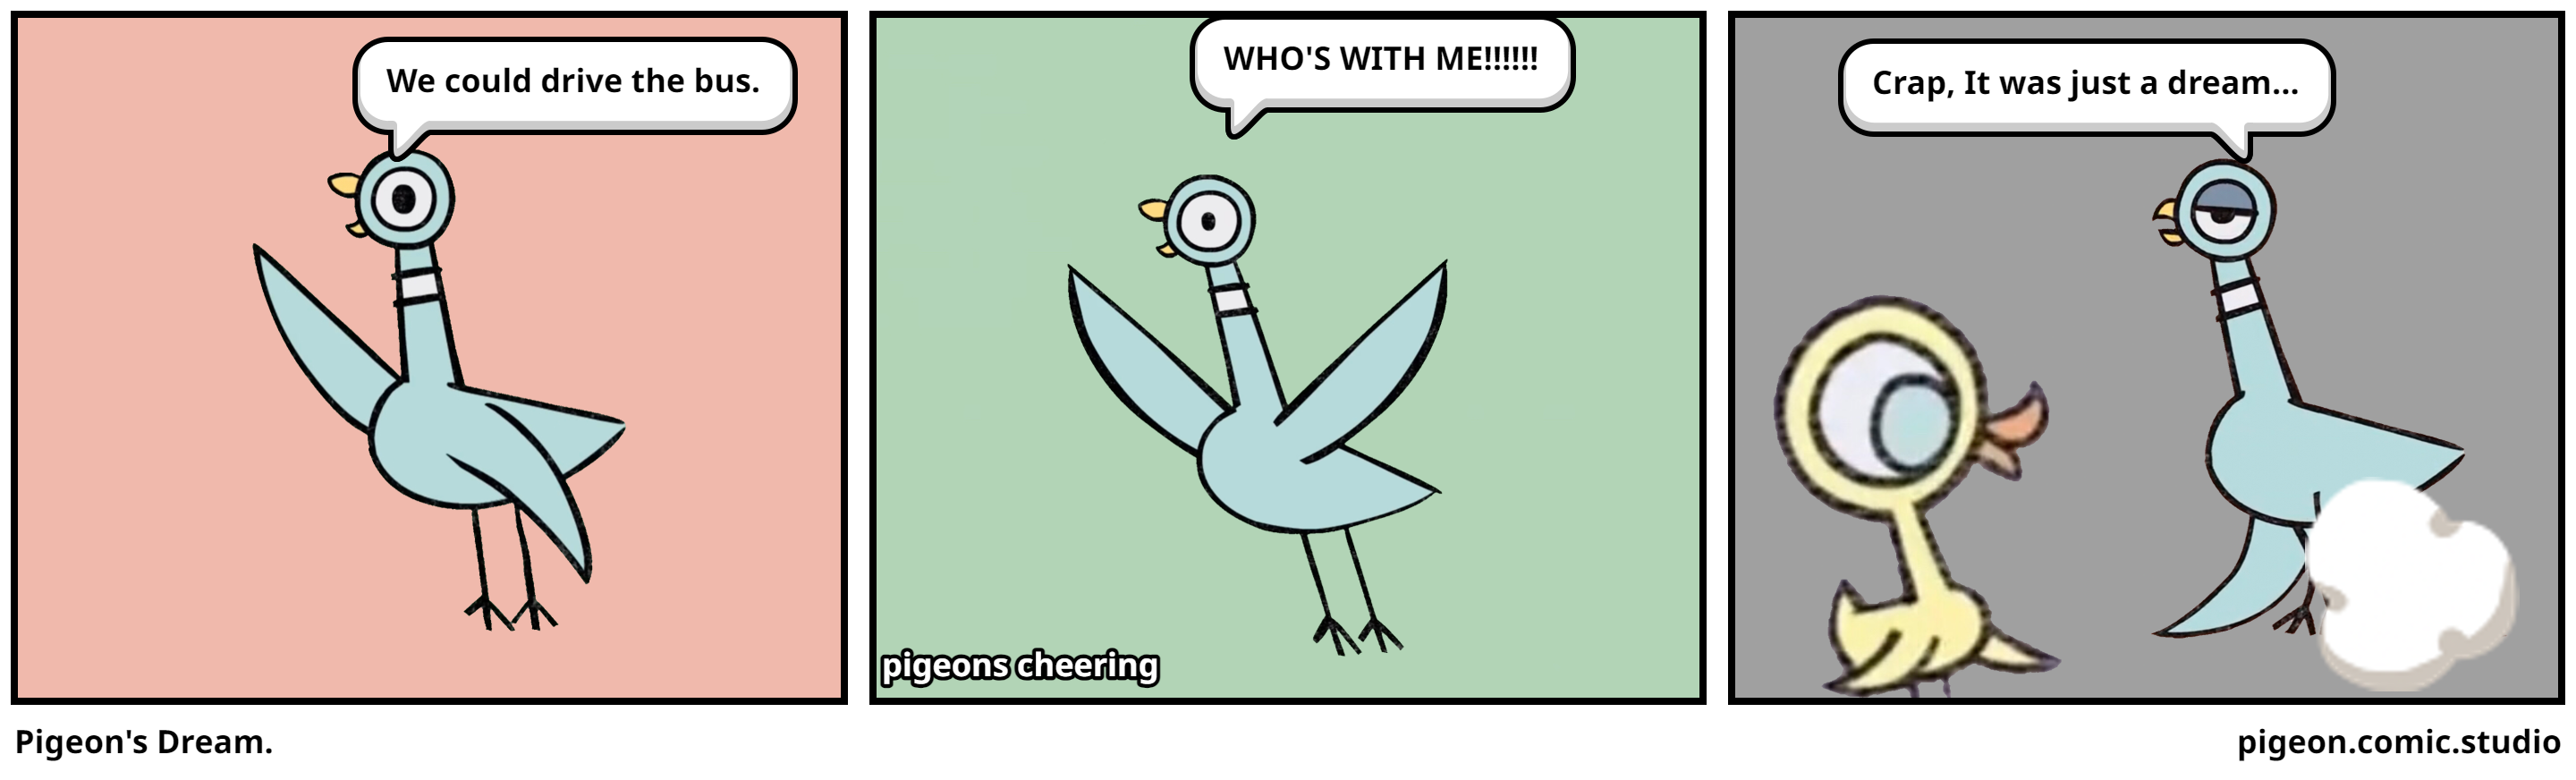 Pigeon's Dream.